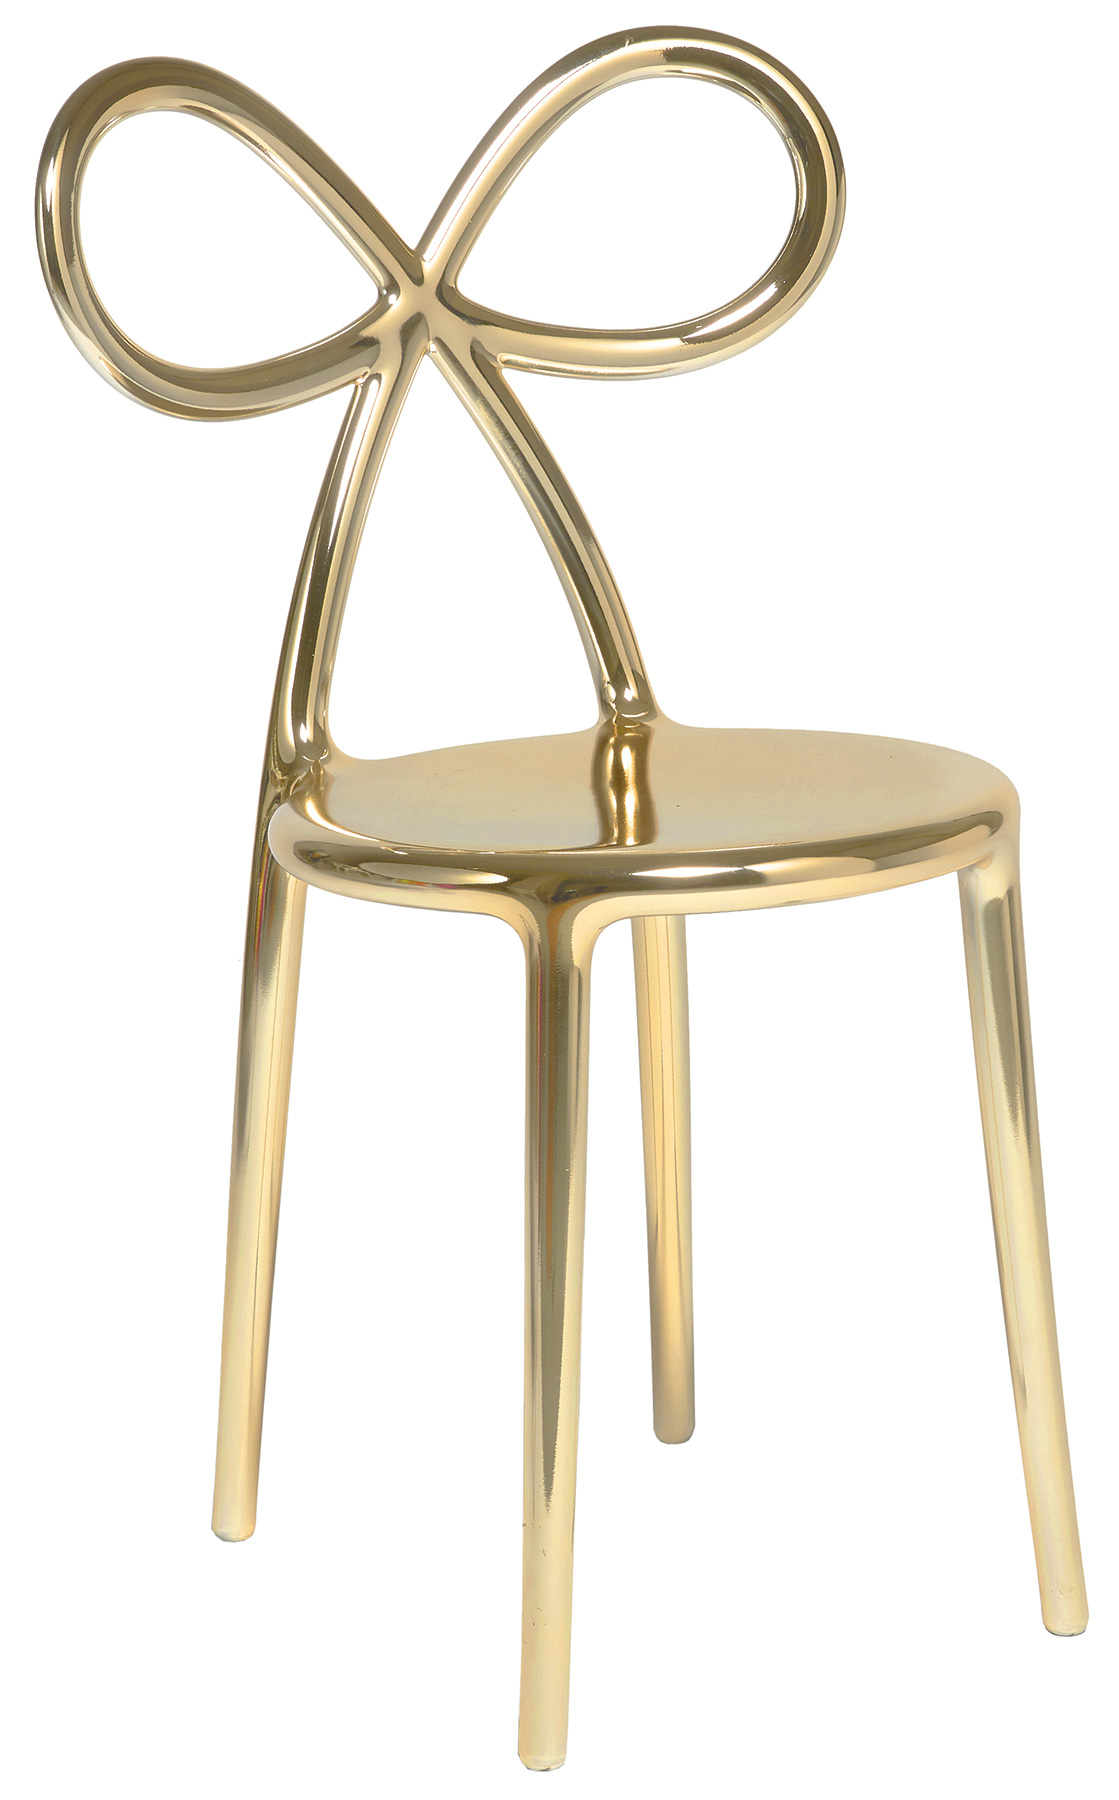 Designer-Stuhl "Ribbon Chair", goldfarbene Metallic-Version - Design Nika Zupanc von Qeeboo